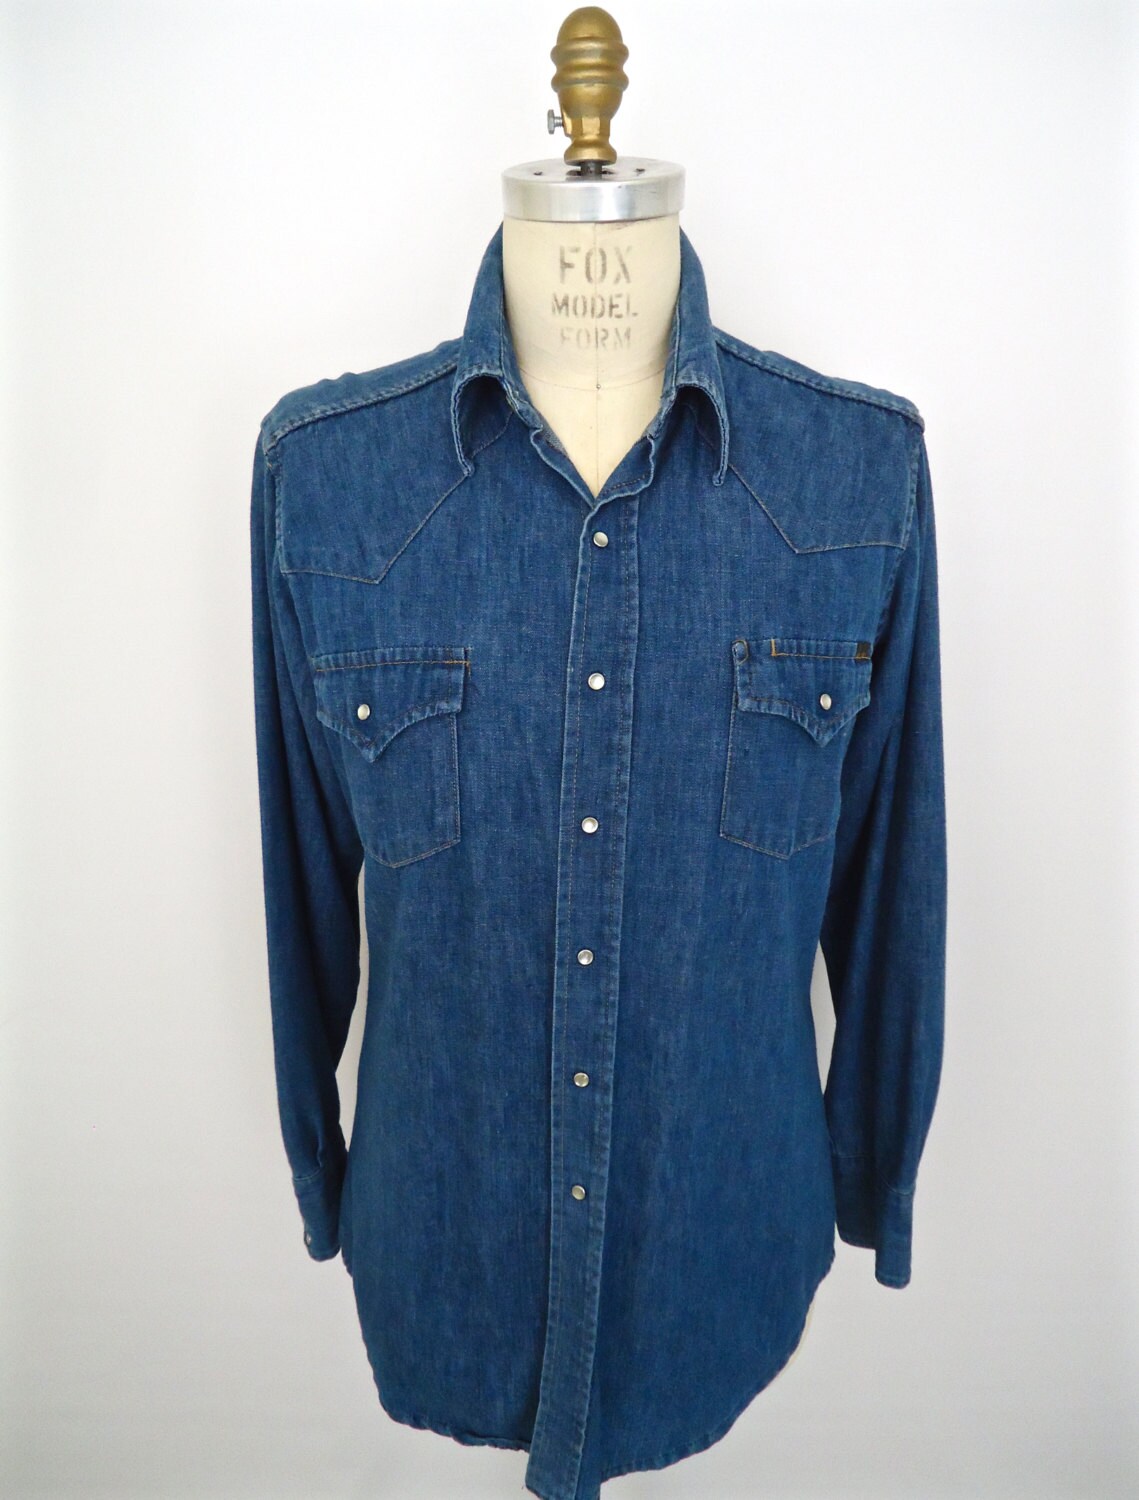 Vintage Denim Shirt with pearl snaps / Roebucks blue jean